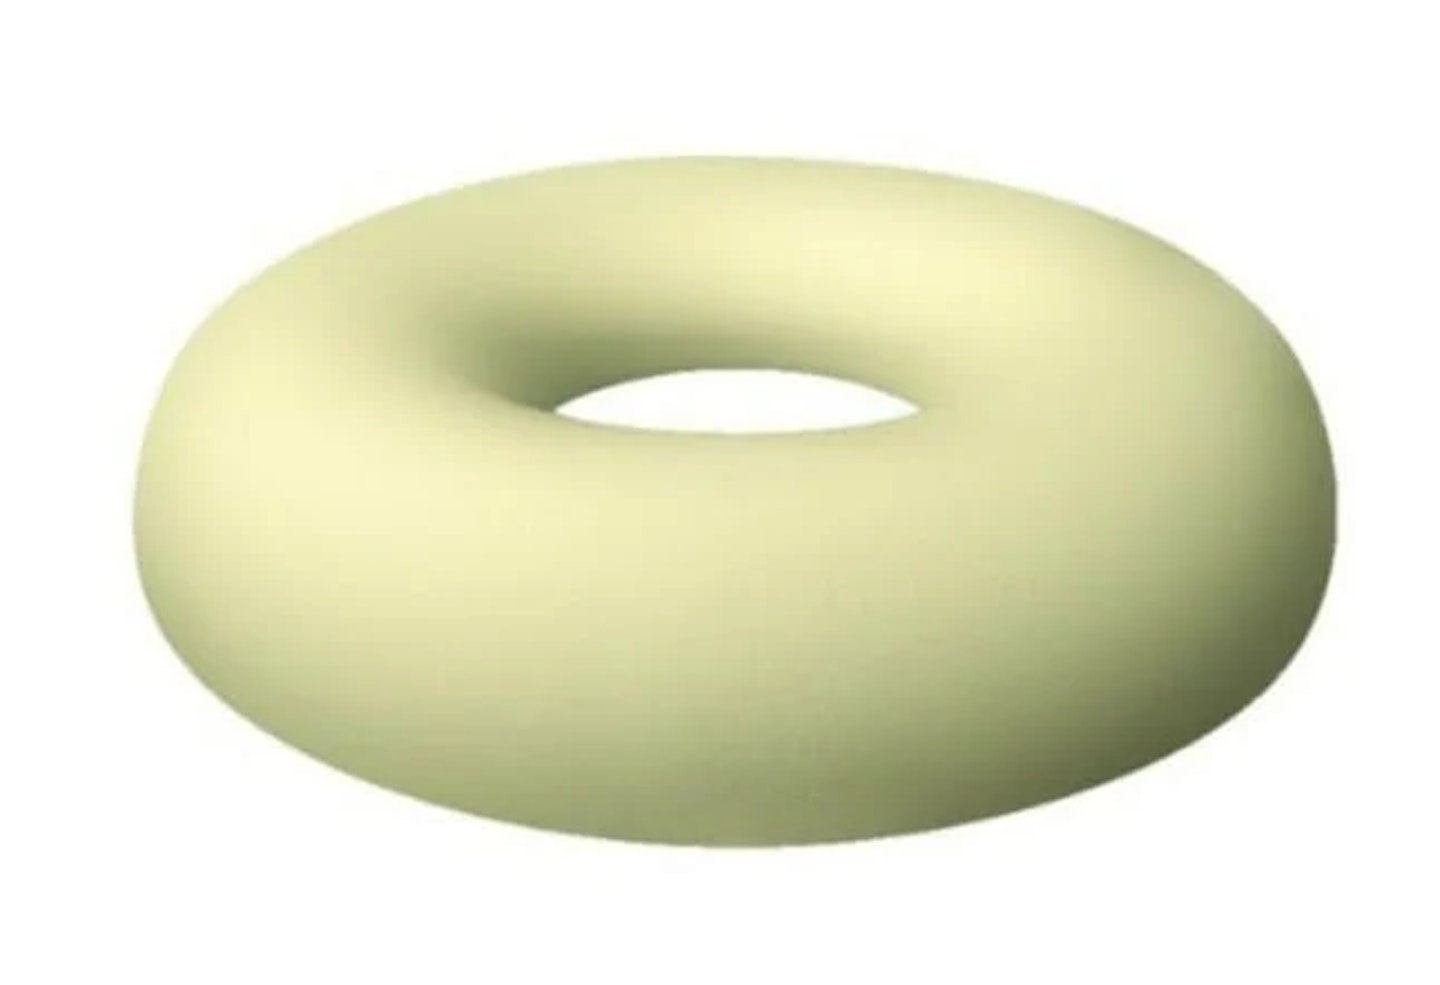 Concept4u Pressure Relief Original Memory Foam Ring Cushion (£24.99)